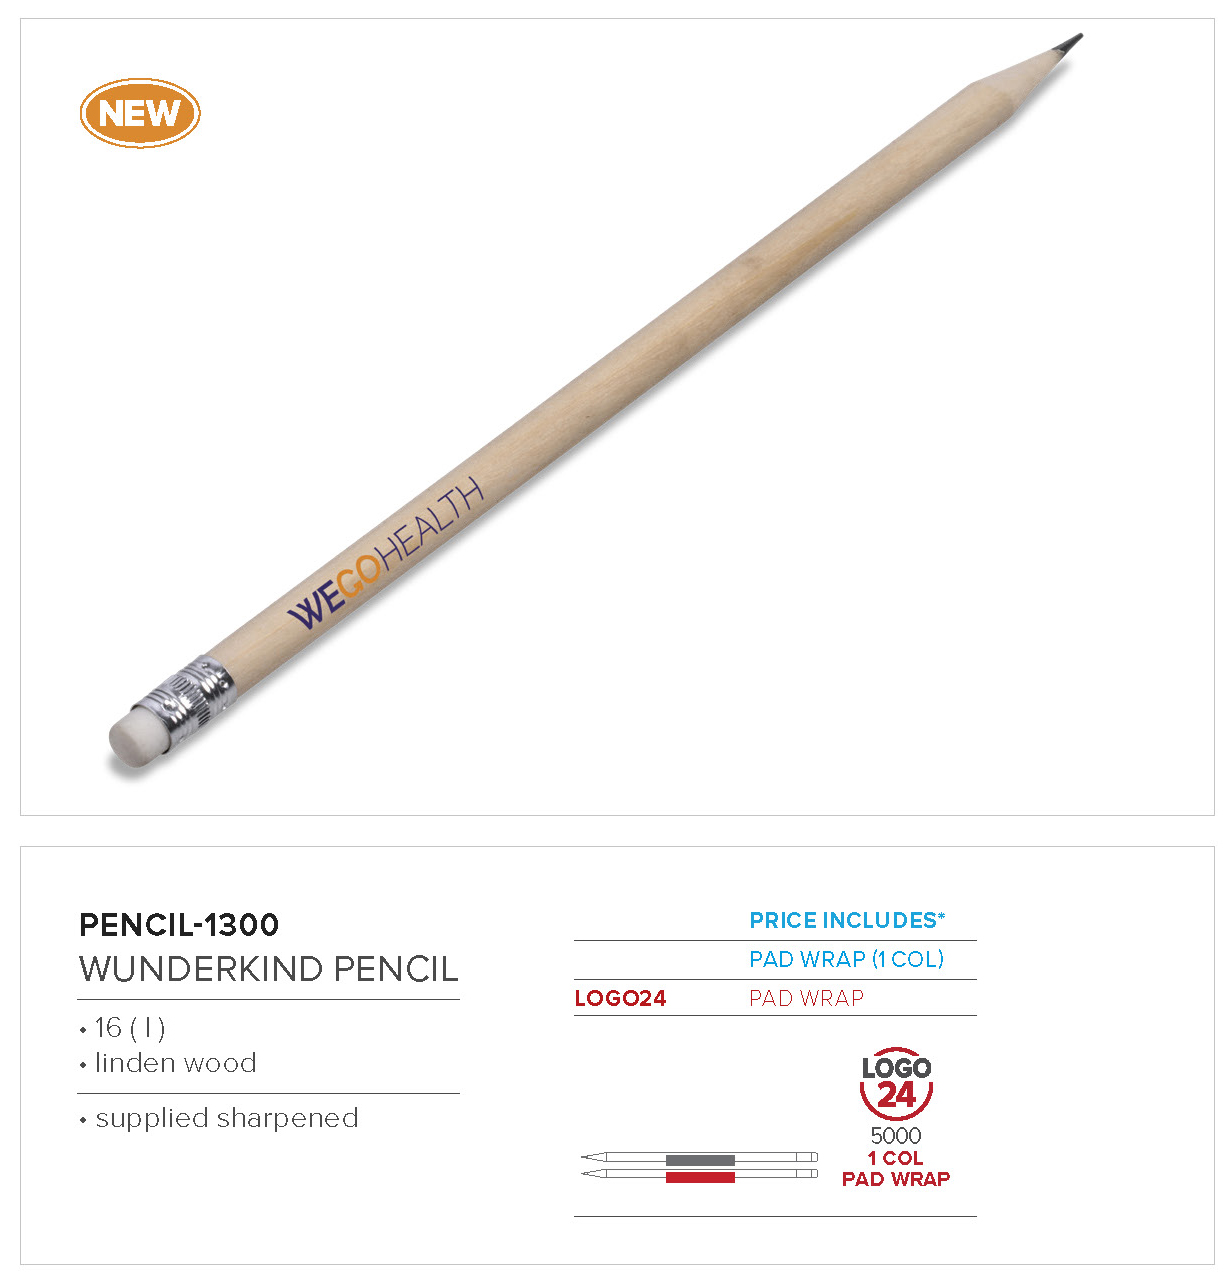 PENCIL-1300 - Wunderkind Wooden Pencil - Catalogue Image